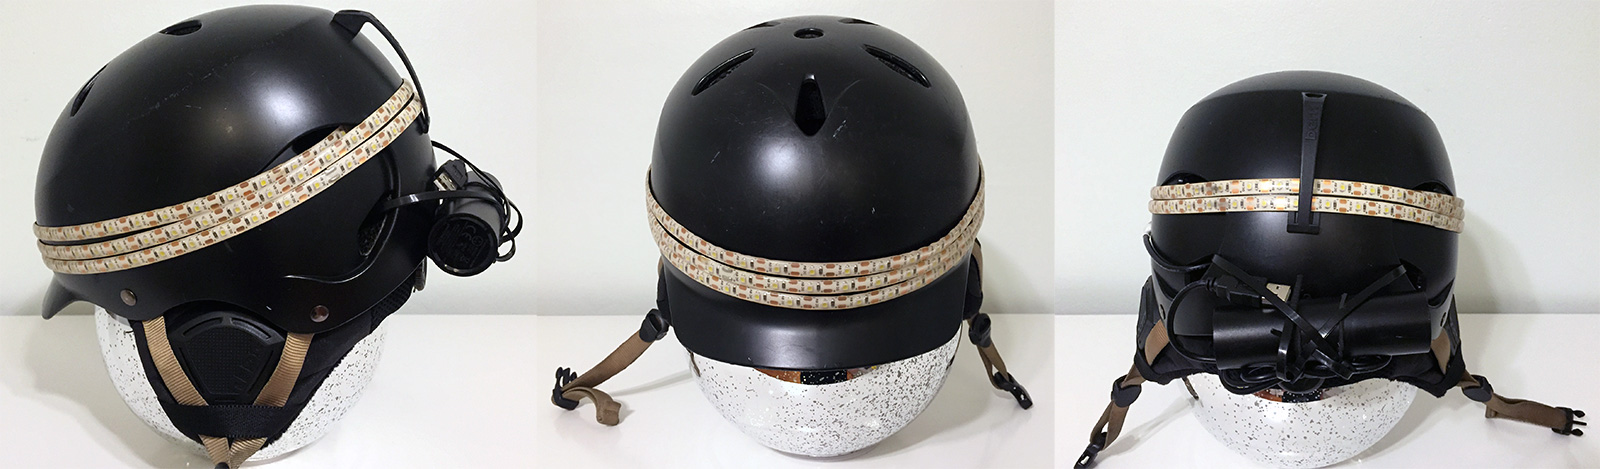 2019 03 01 Helmet Light